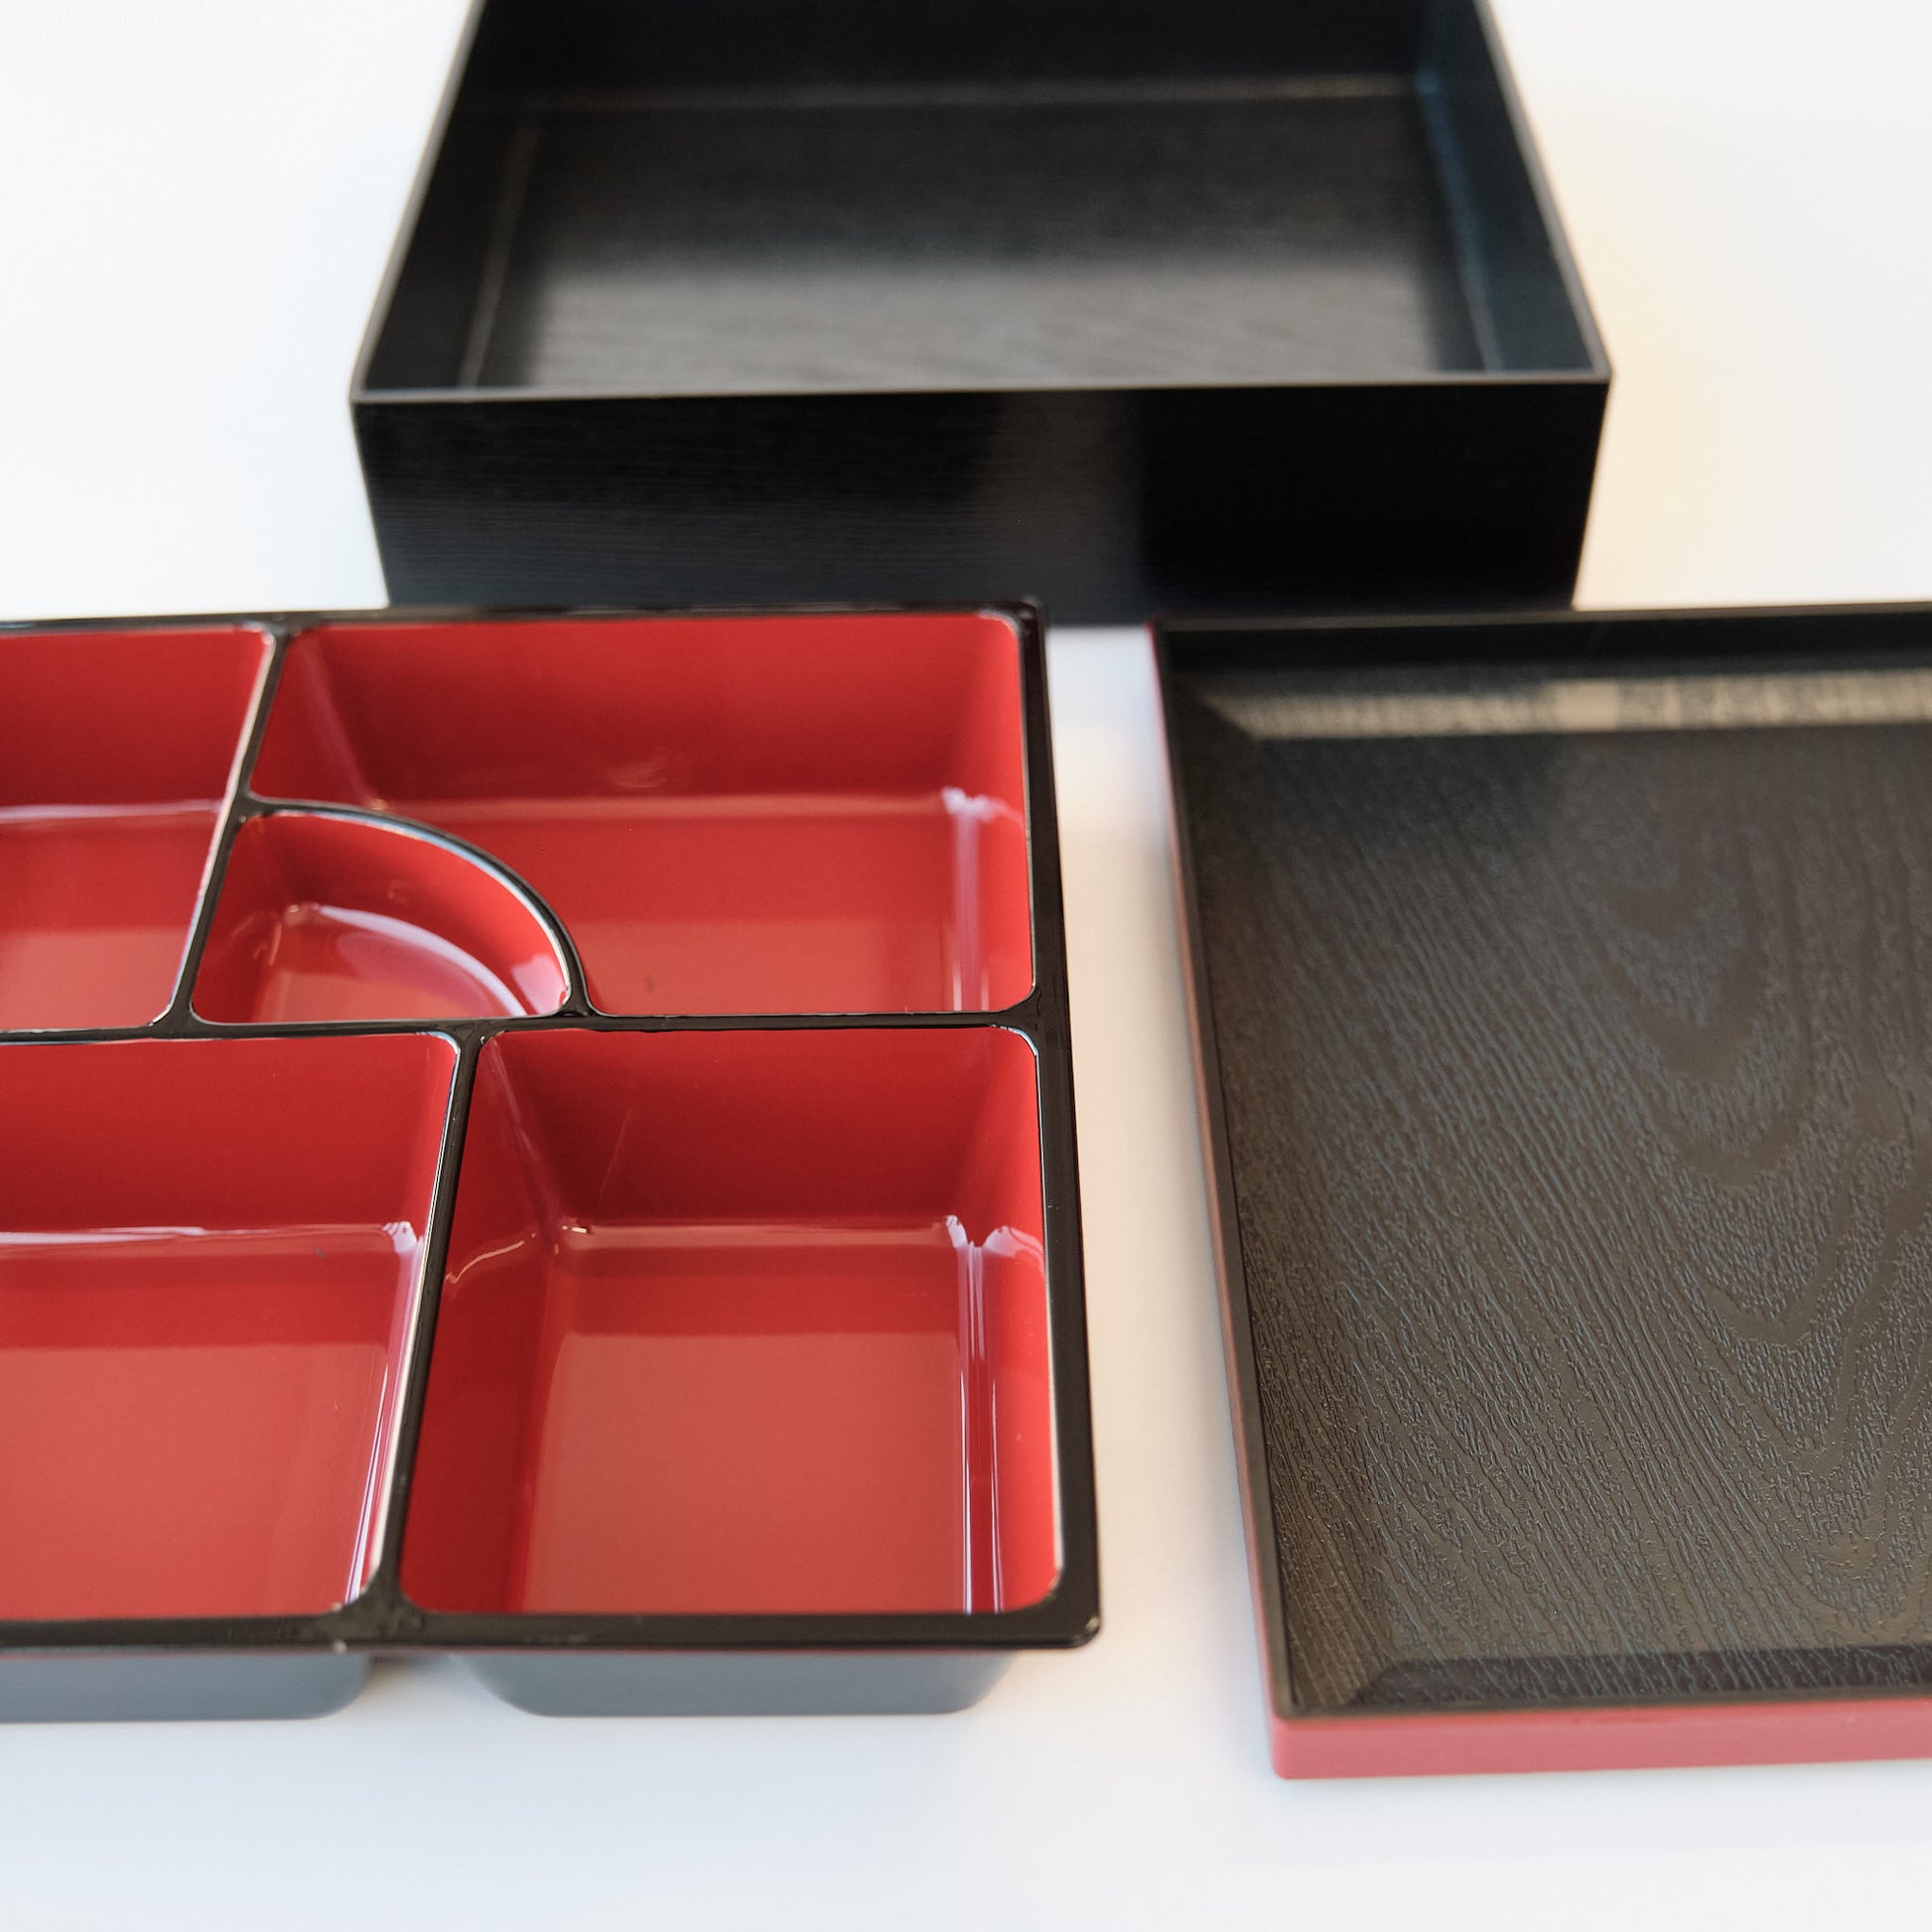 Black and Red Rectangular Bento Box